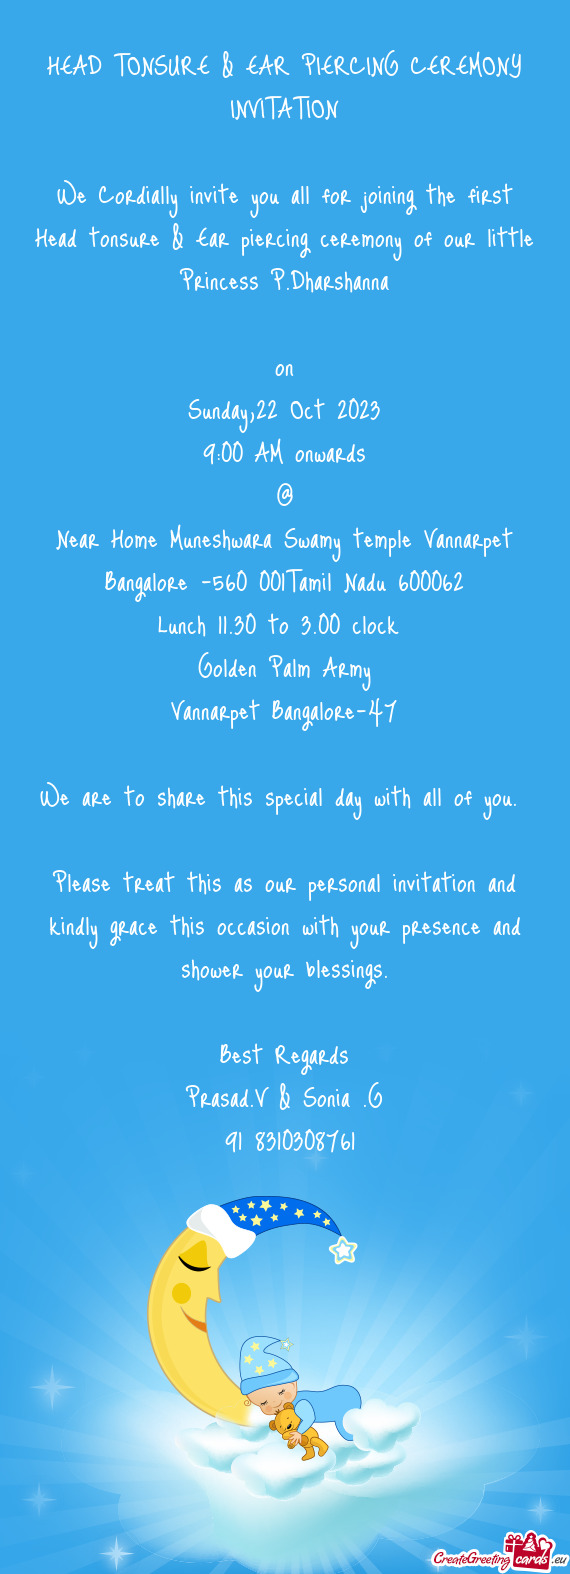 Near Home Muneshwara Swamy temple Vannarpet Bangalore -560 001Tamil Nadu 600062